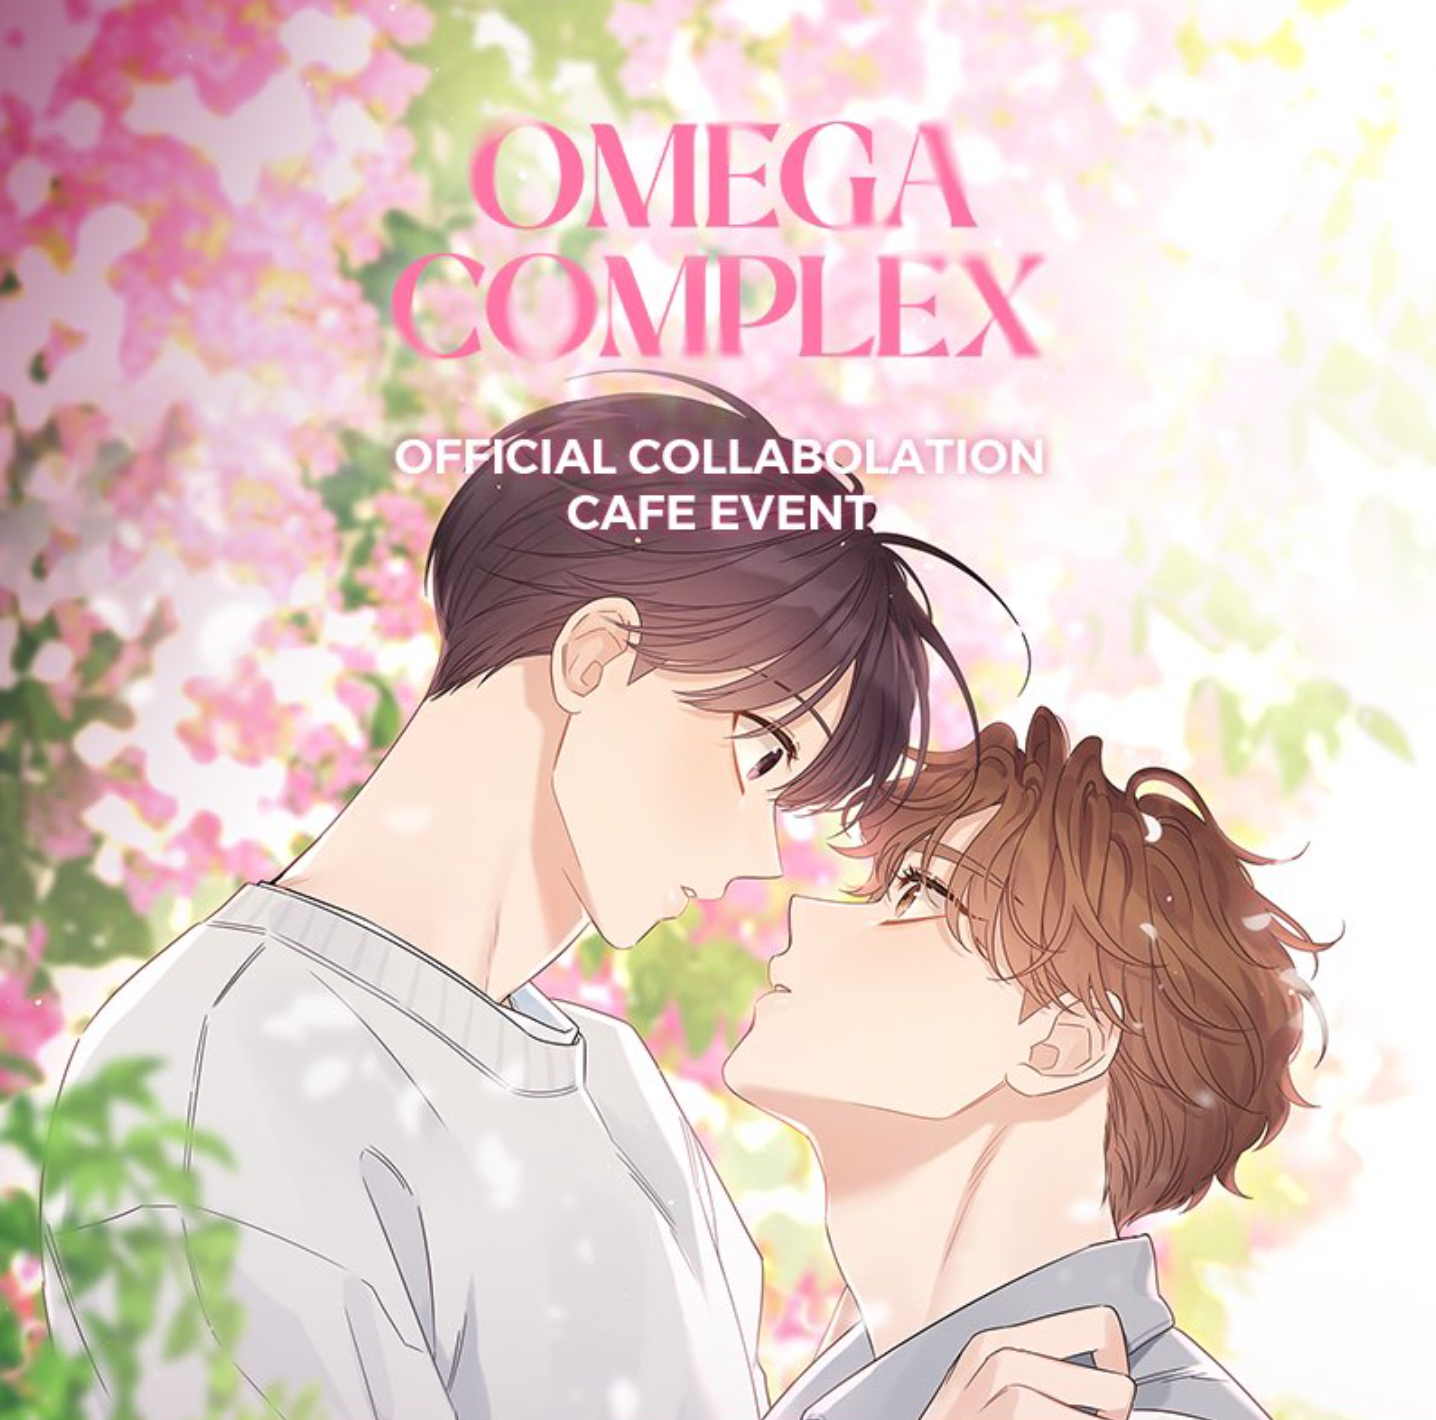 [collaboration cafe] Omega Complex : photo card